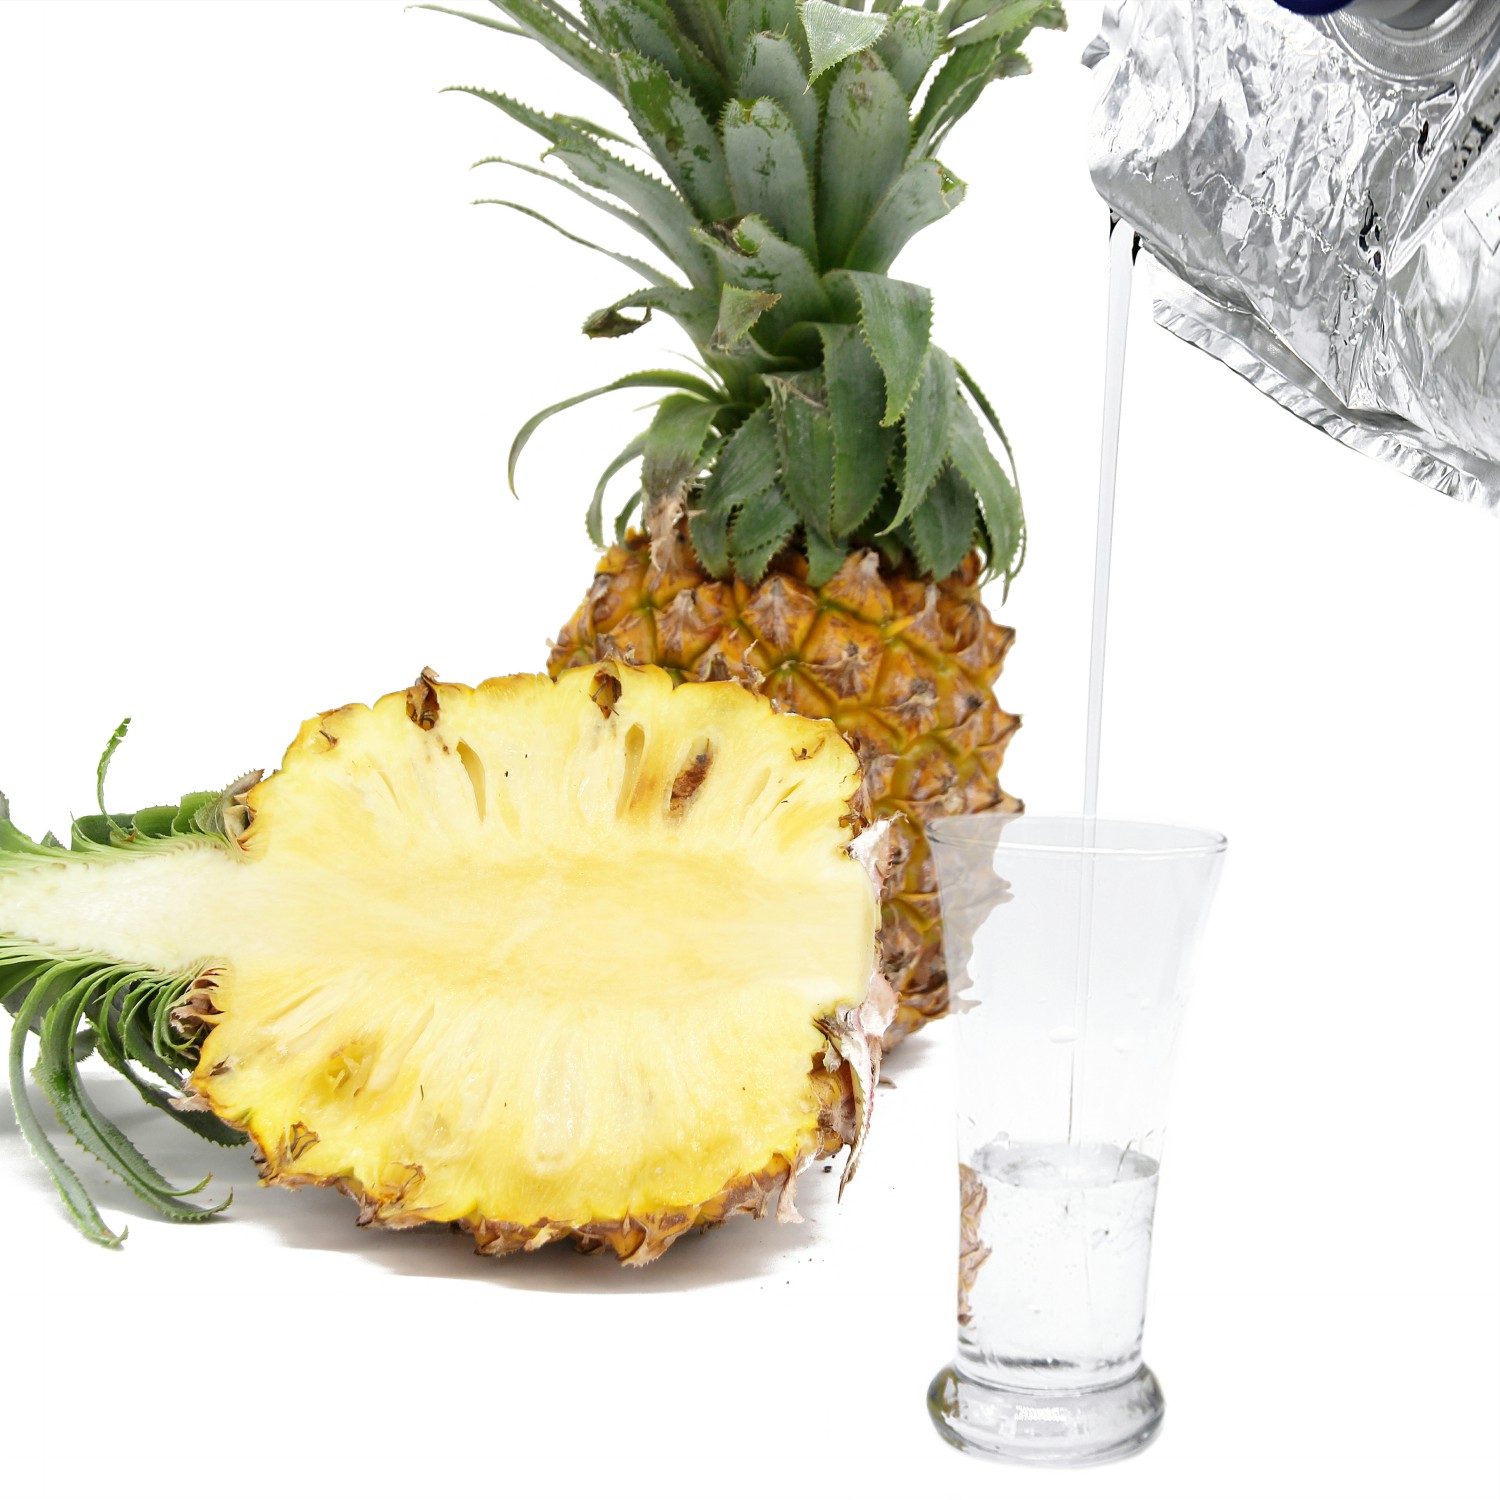 Deionized pineapple juice concentrate